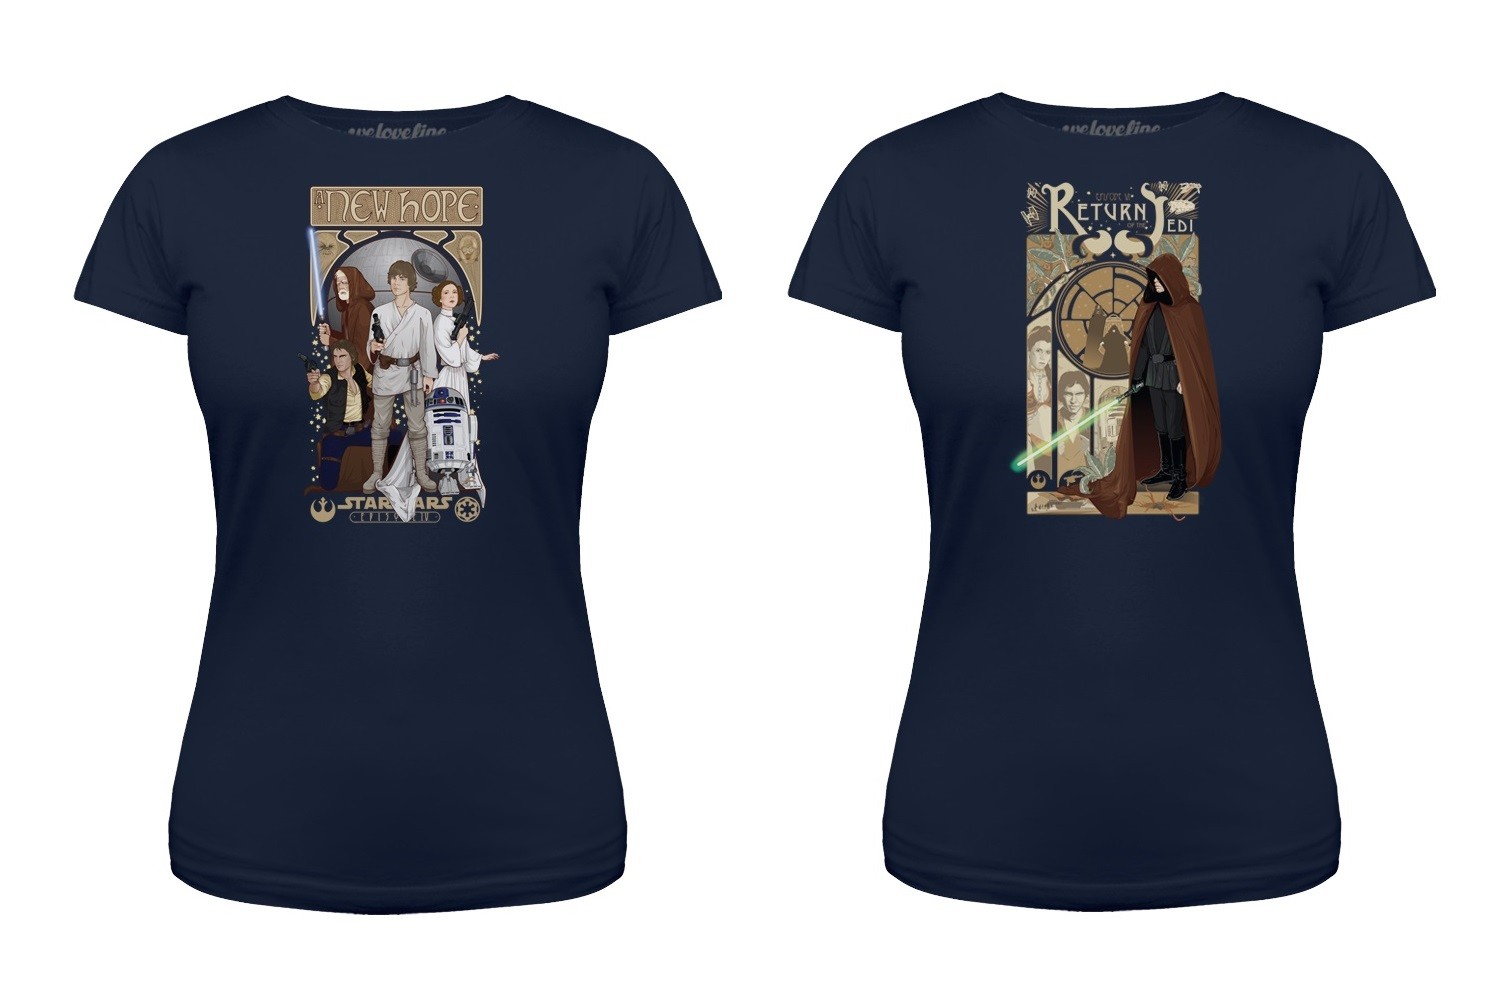 Women's Star Wars Nouveau artwork t-shirts at We Love Fine